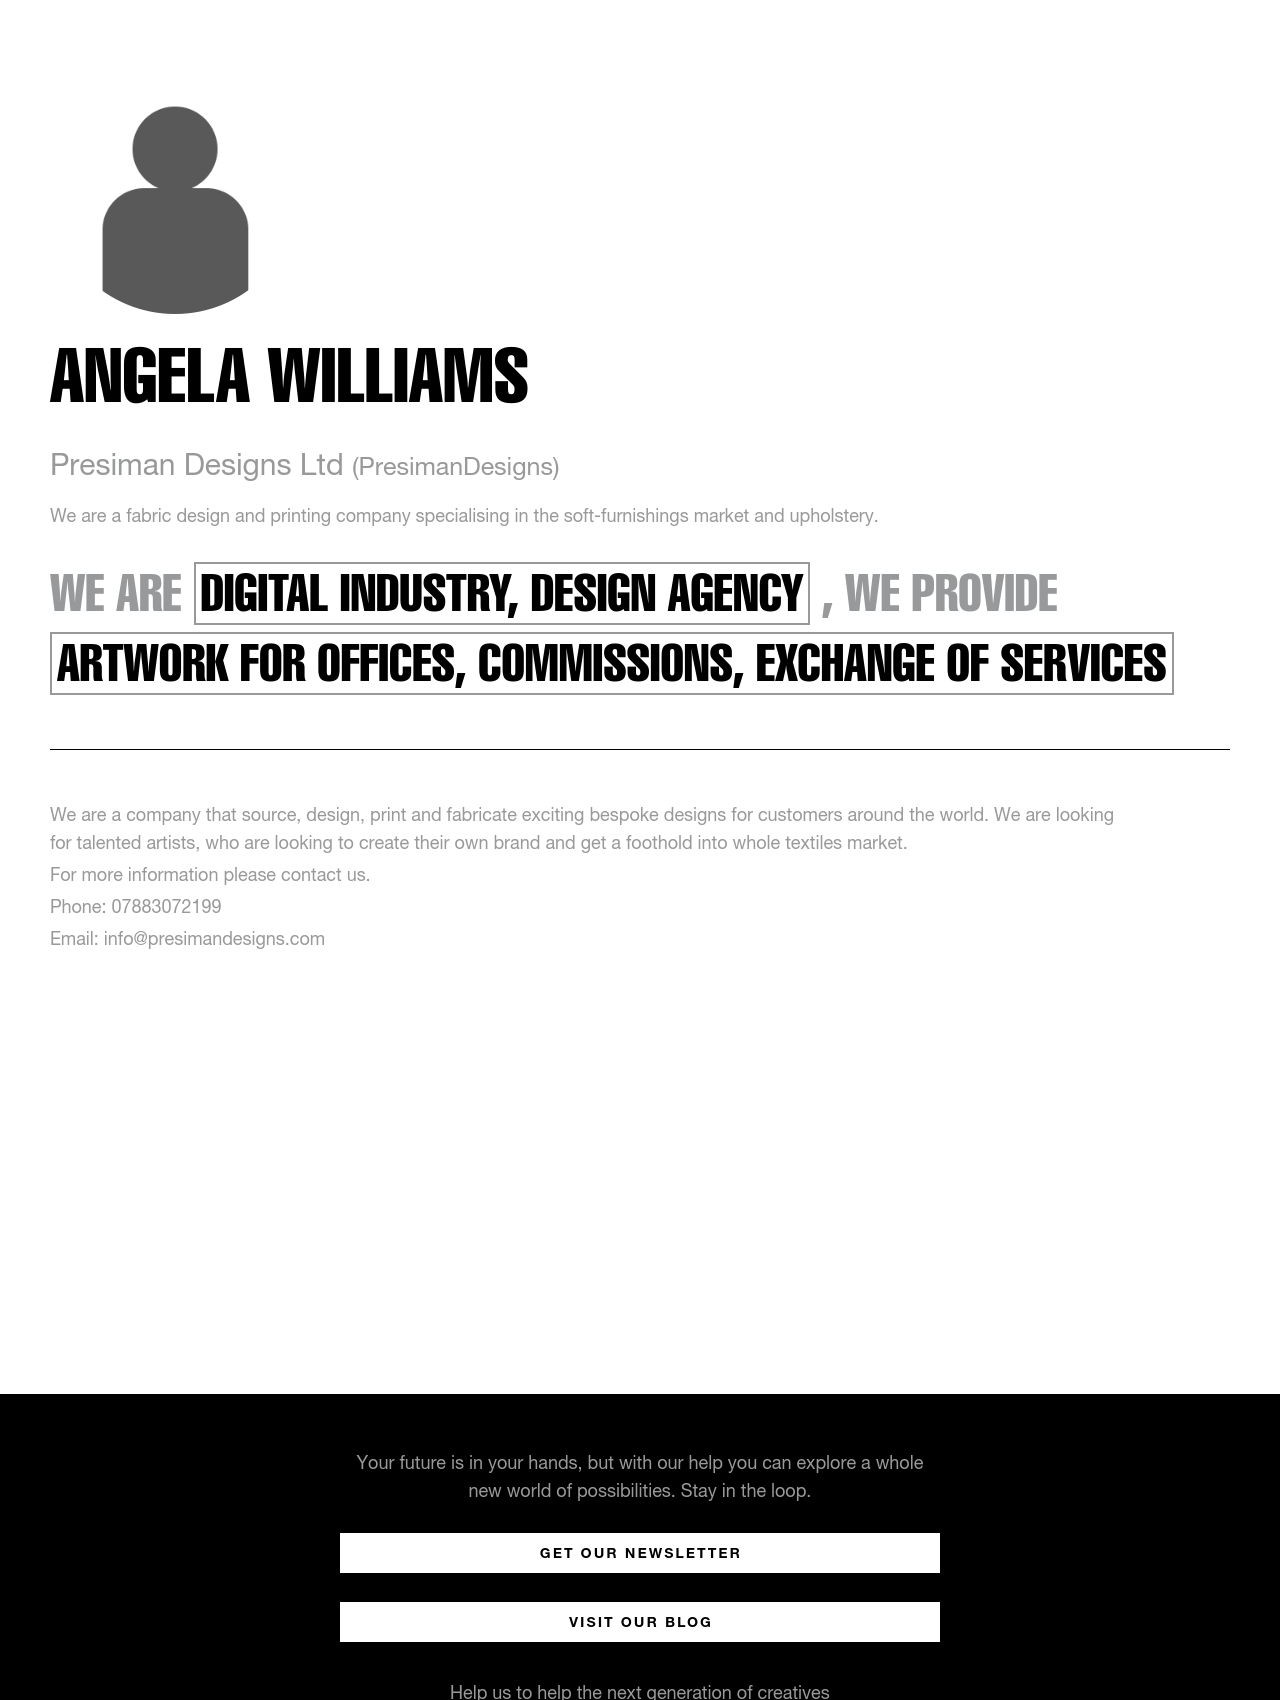 Angela Williams